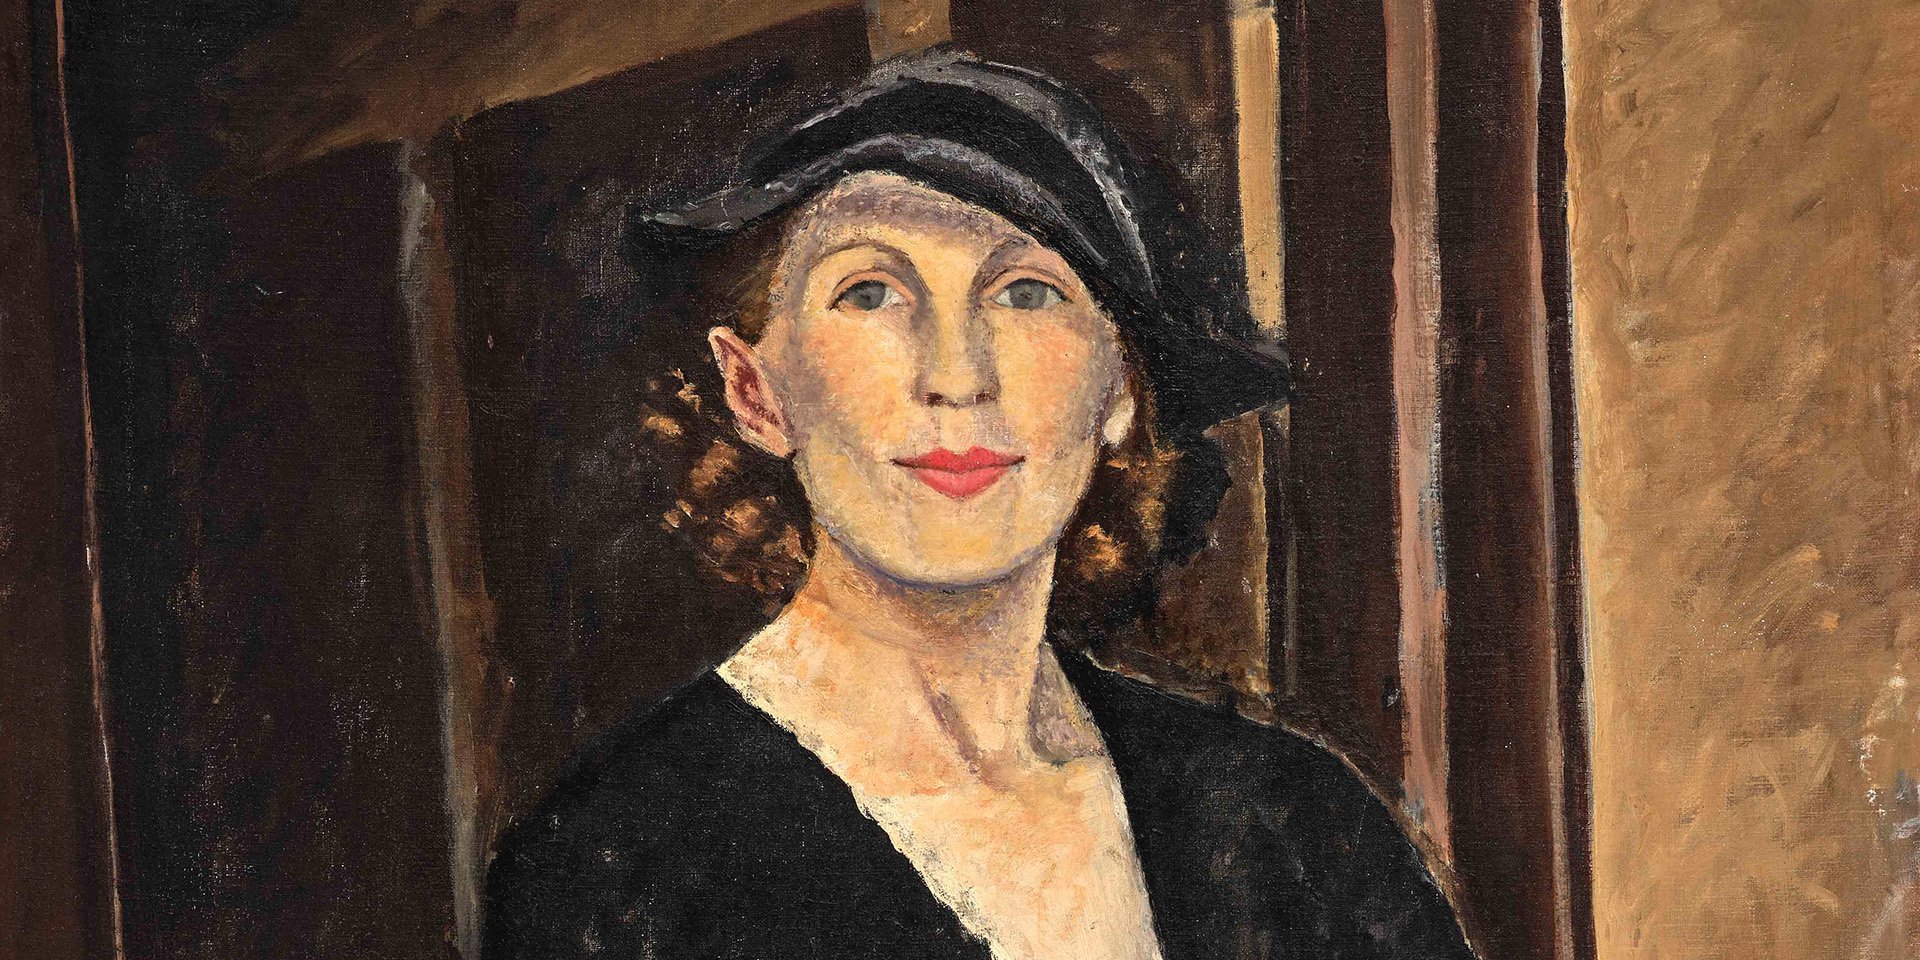 Paraskeva Clark, Myself (detail), 1933. Oil on canvas